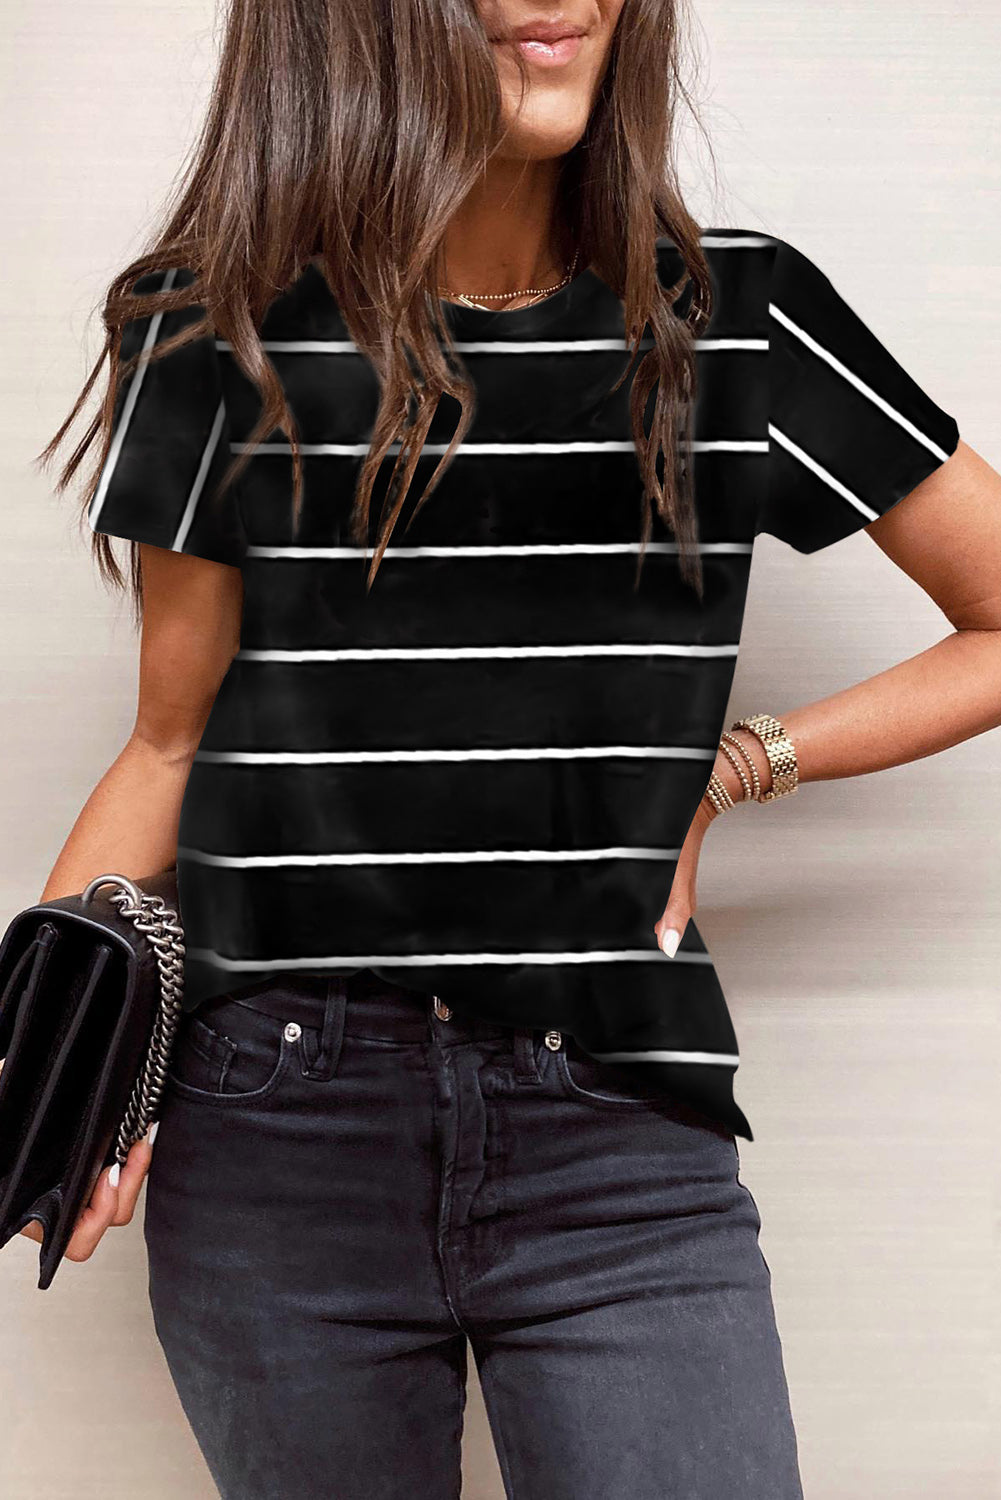 Black Round Neck Striped Print T-shirt